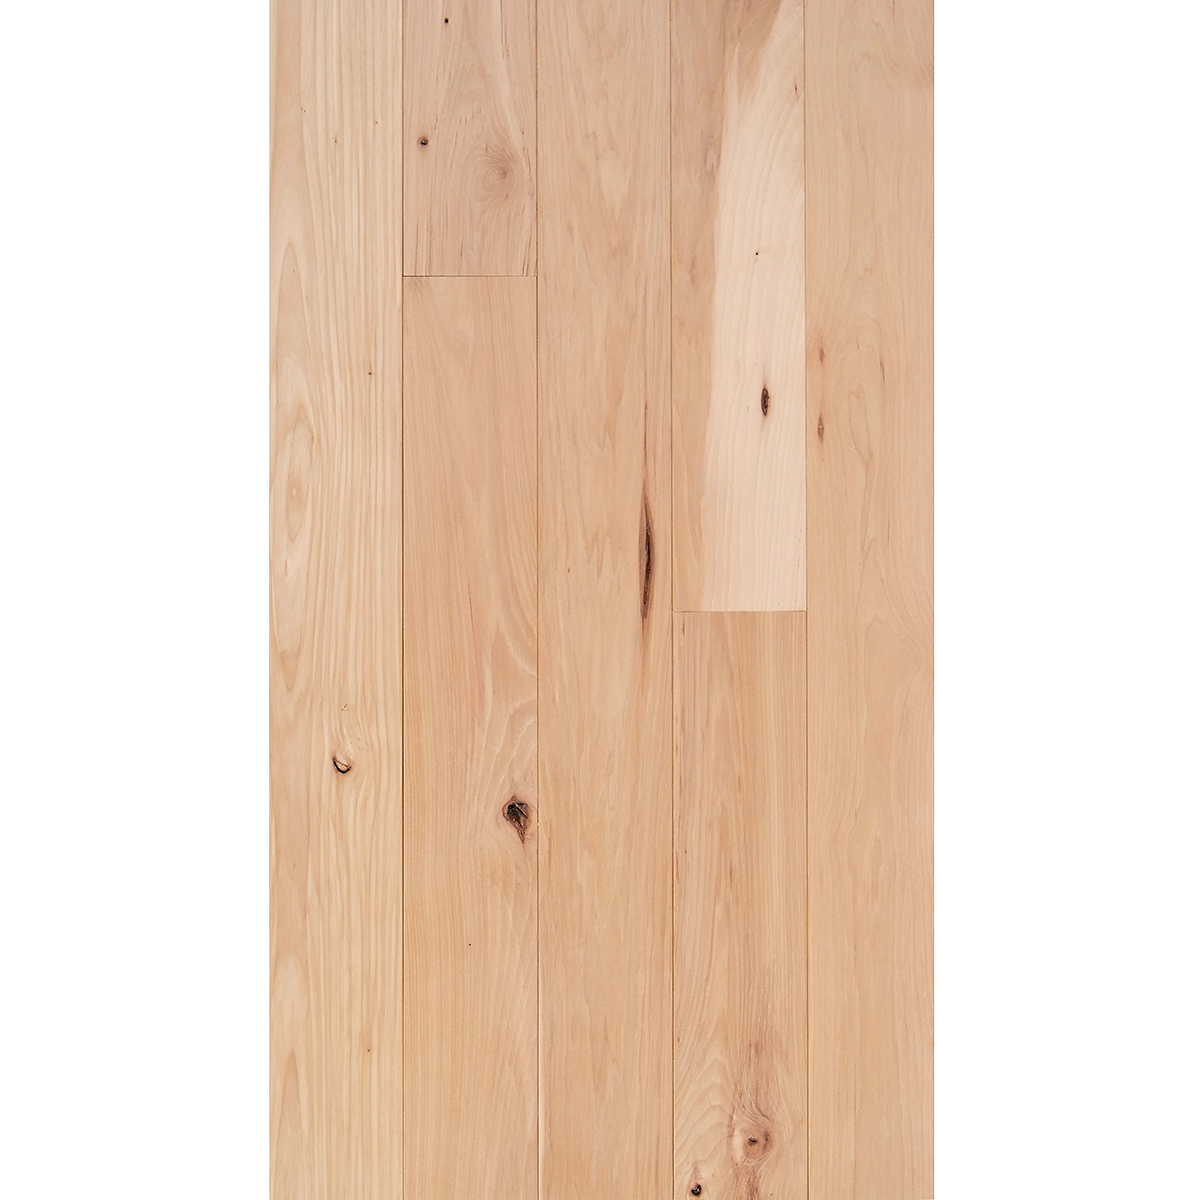 Hickory 3 4 X Character Grade Flooring, Character Grade Hardwood Flooring